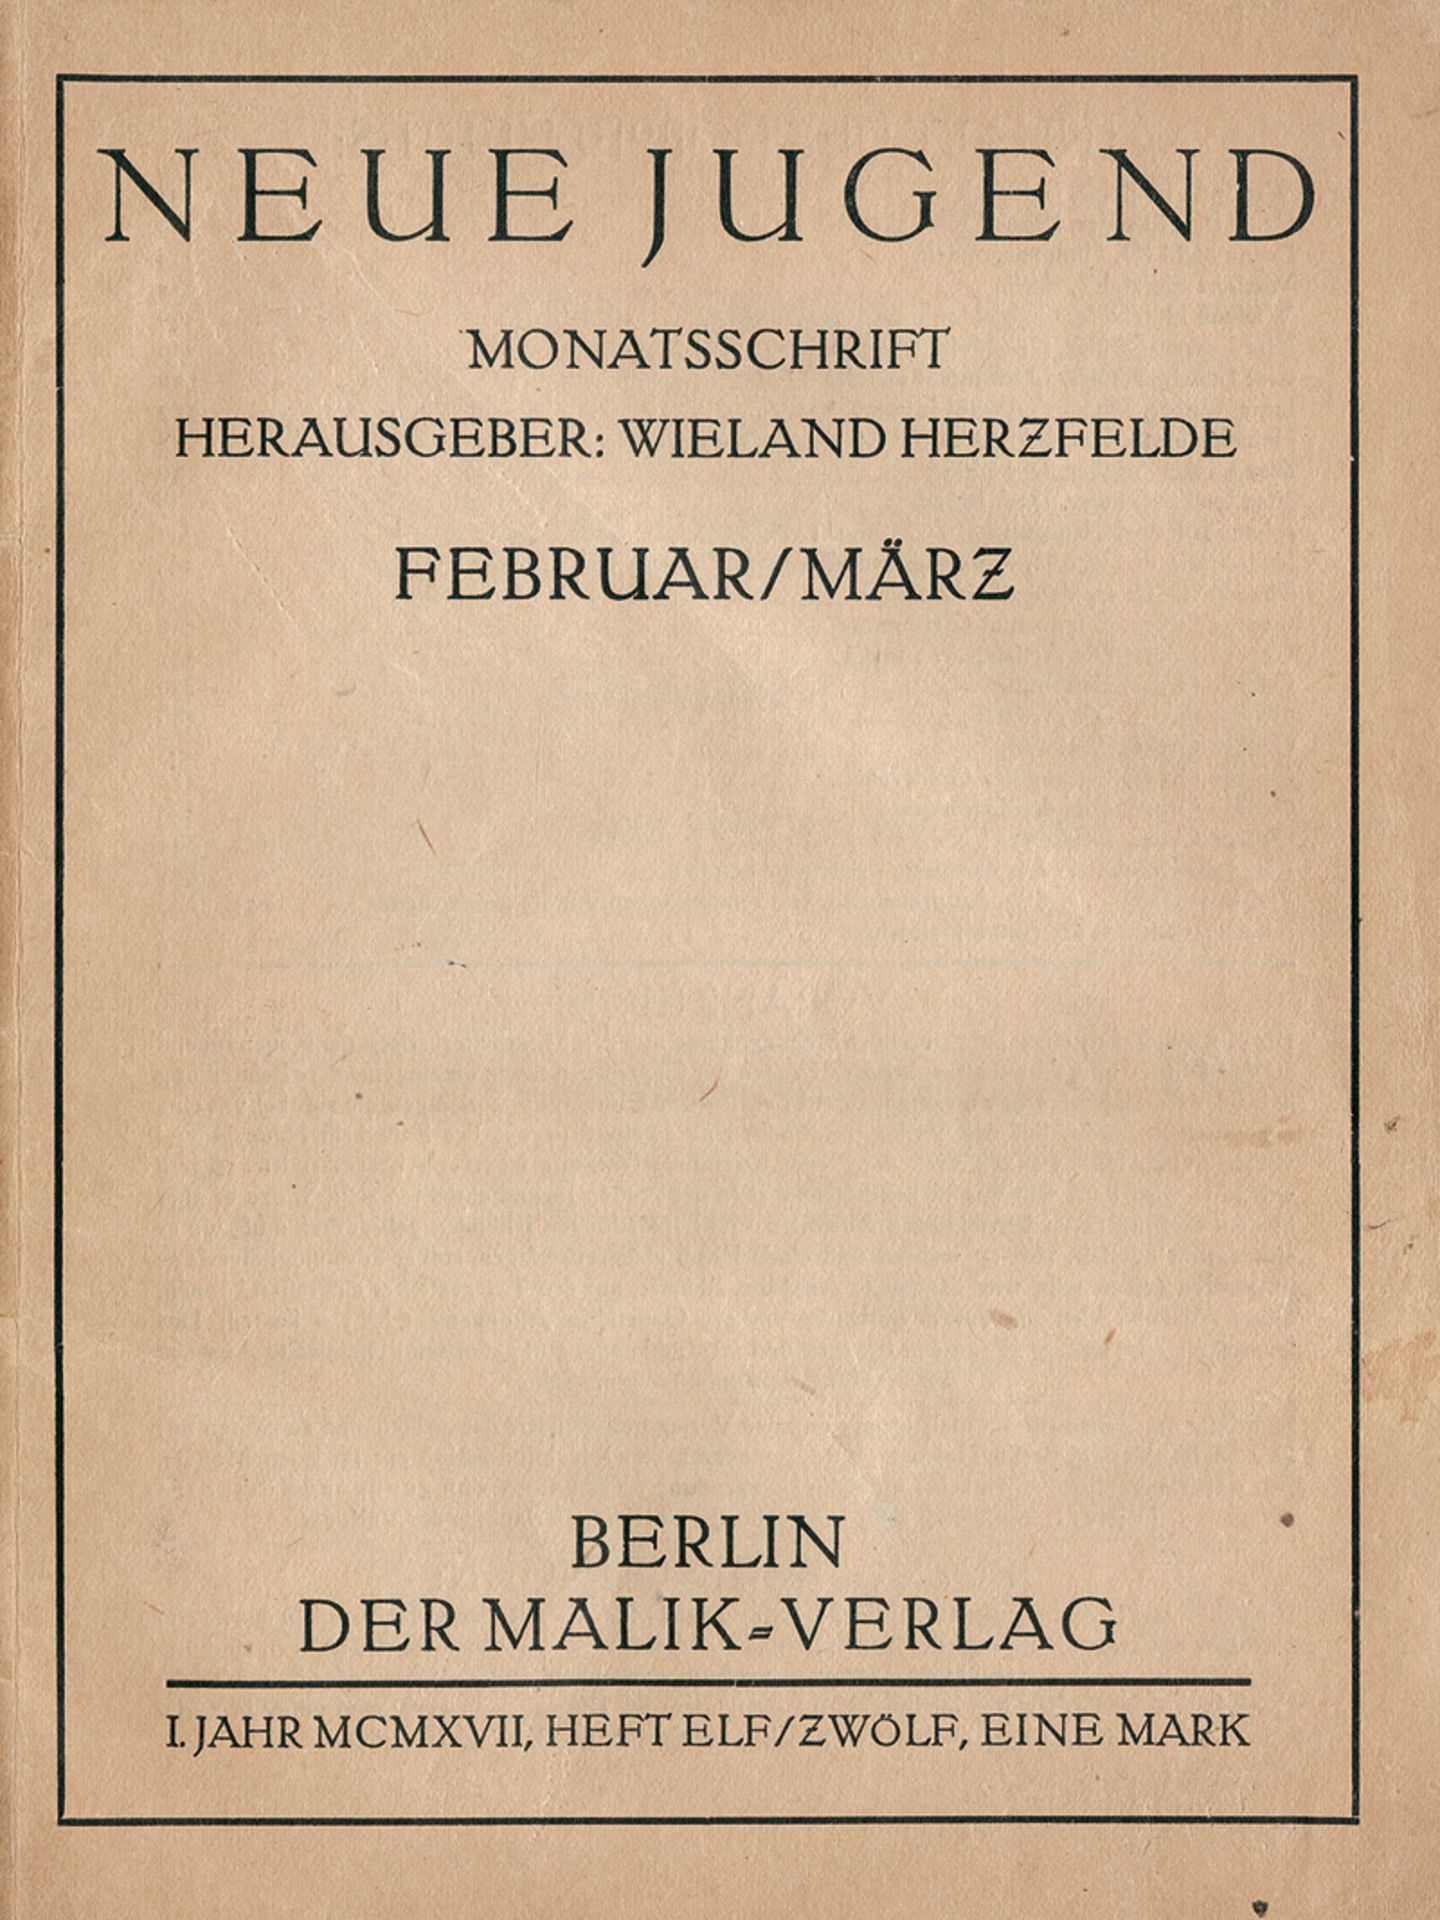 Neue Jugend: Monatsschrift, Doppelnummer Februar-März 1917